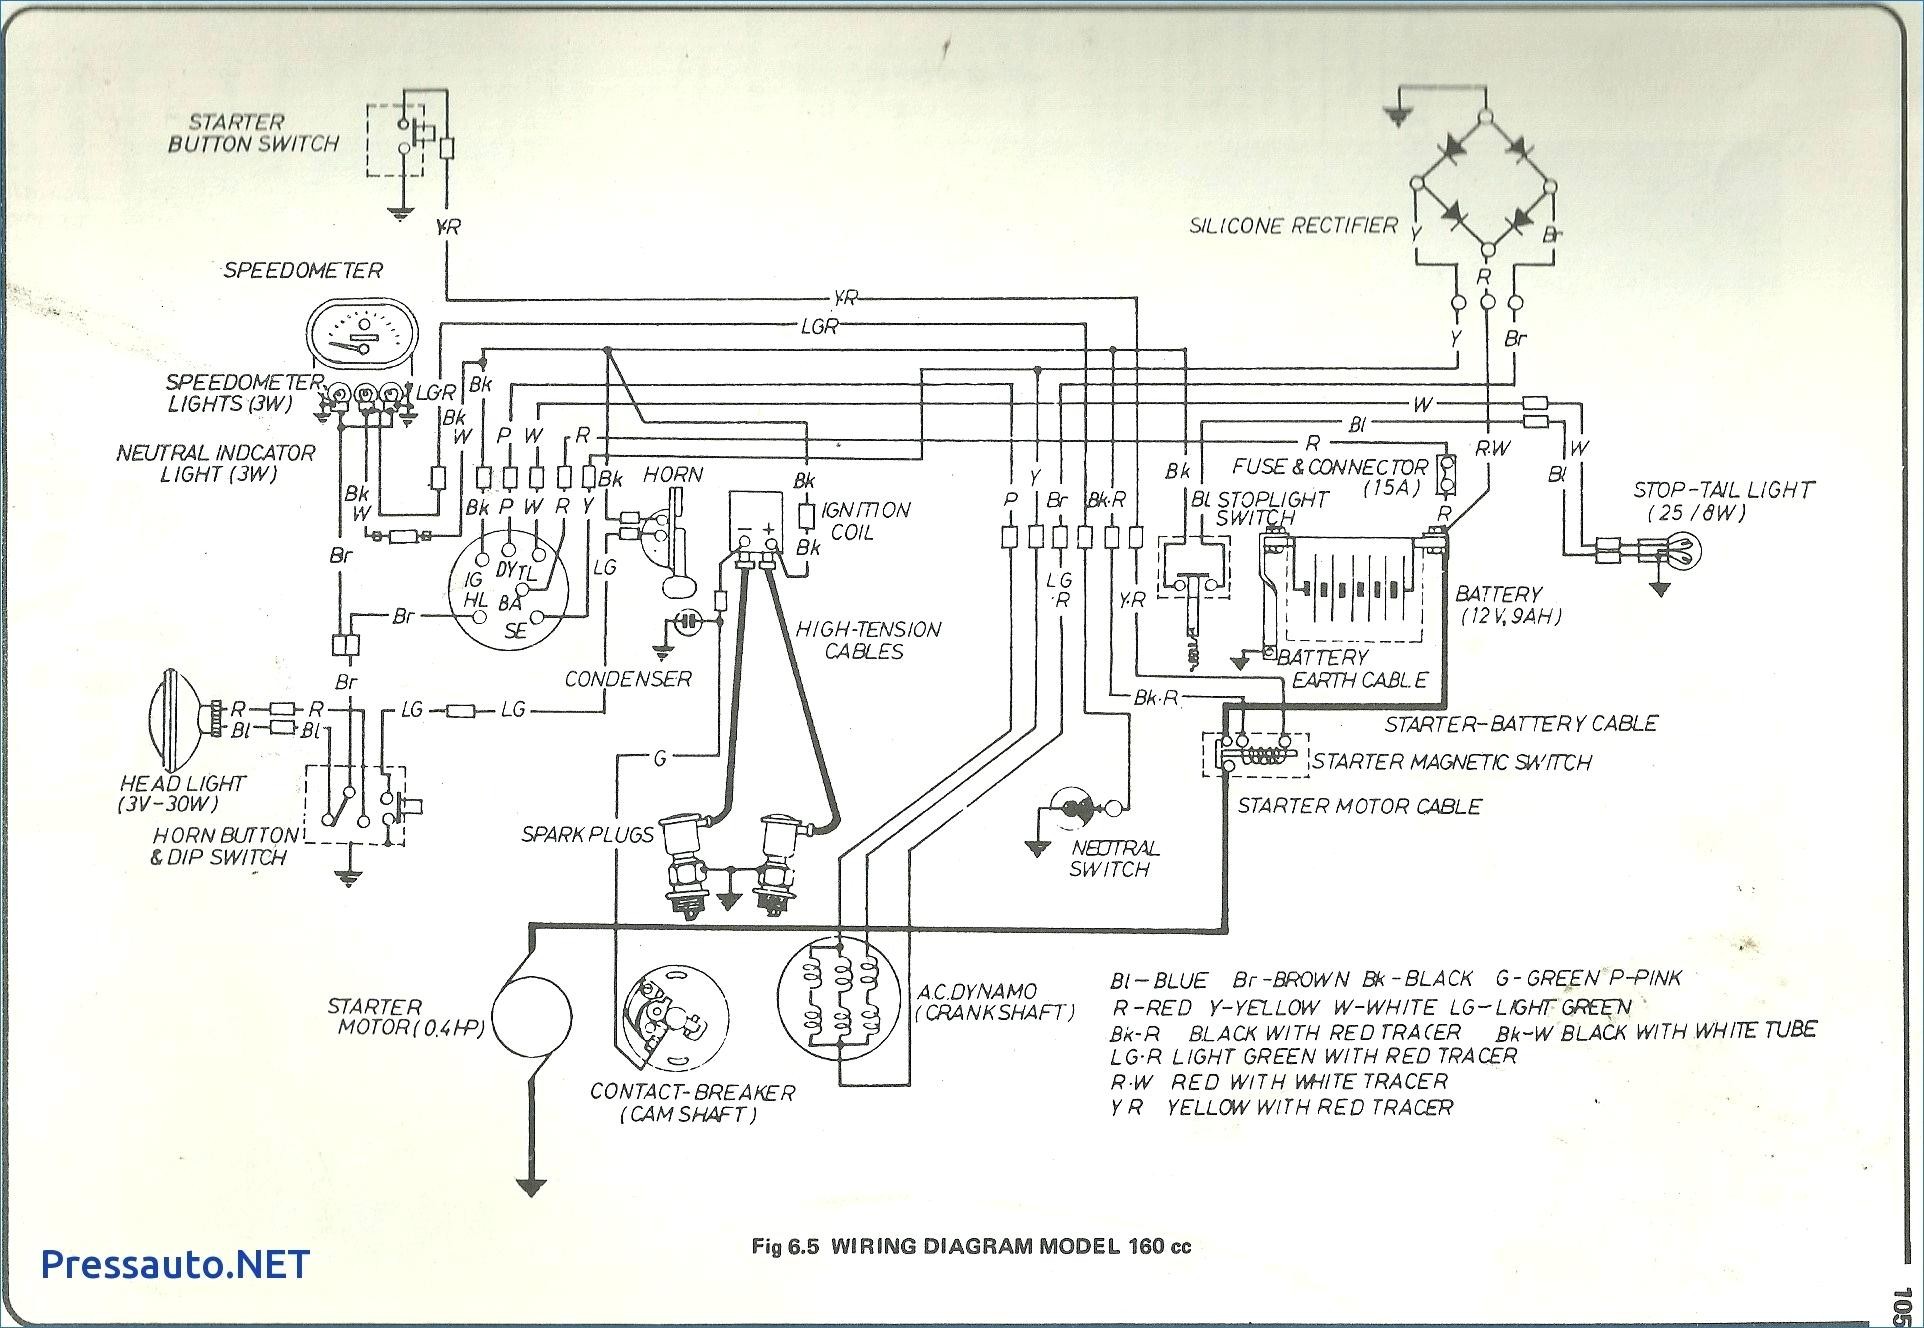 Kenmore Dryer Wiring Diagram Wiring Diagram for Kenmore Dryer Beautiful Maytag Dryer Wiring Schematic Built